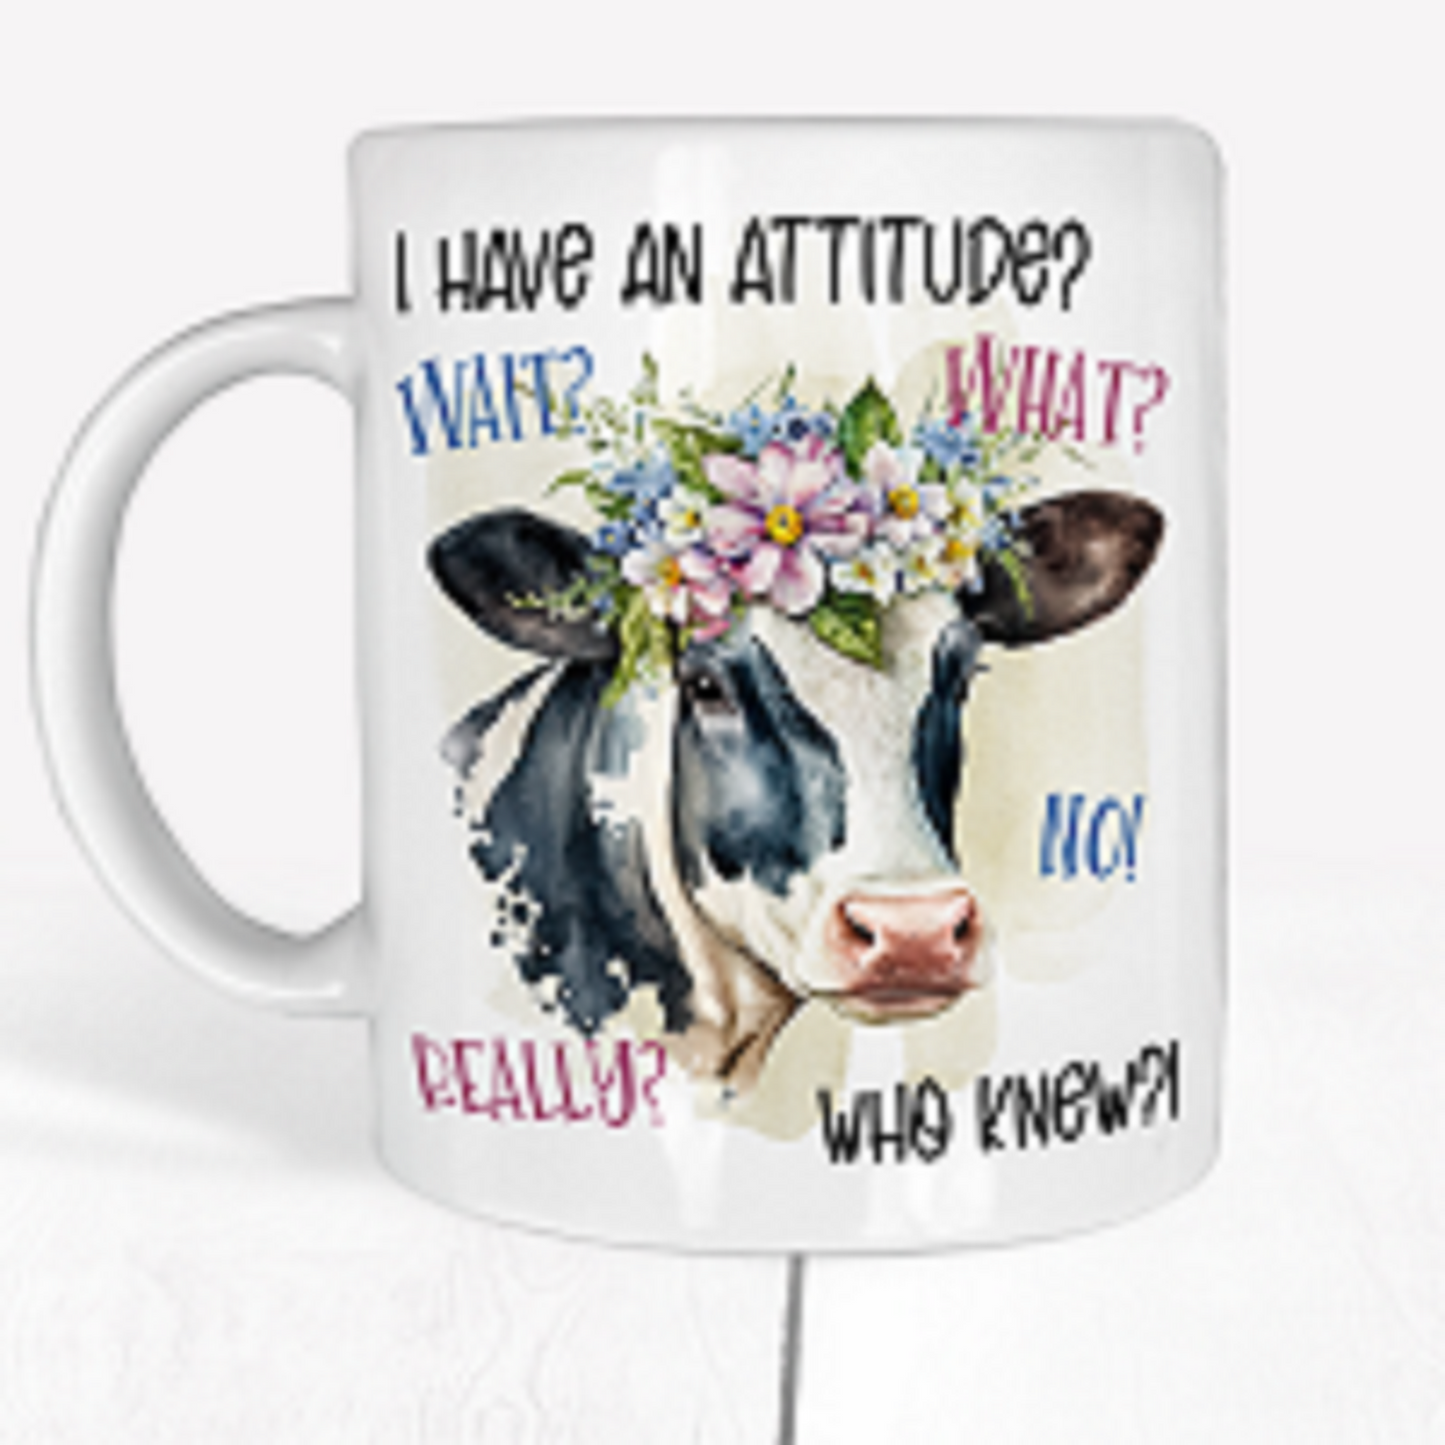  I have a attitude Funny Cow Mug by Free Spirit Accessories sold by Free Spirit Accessories